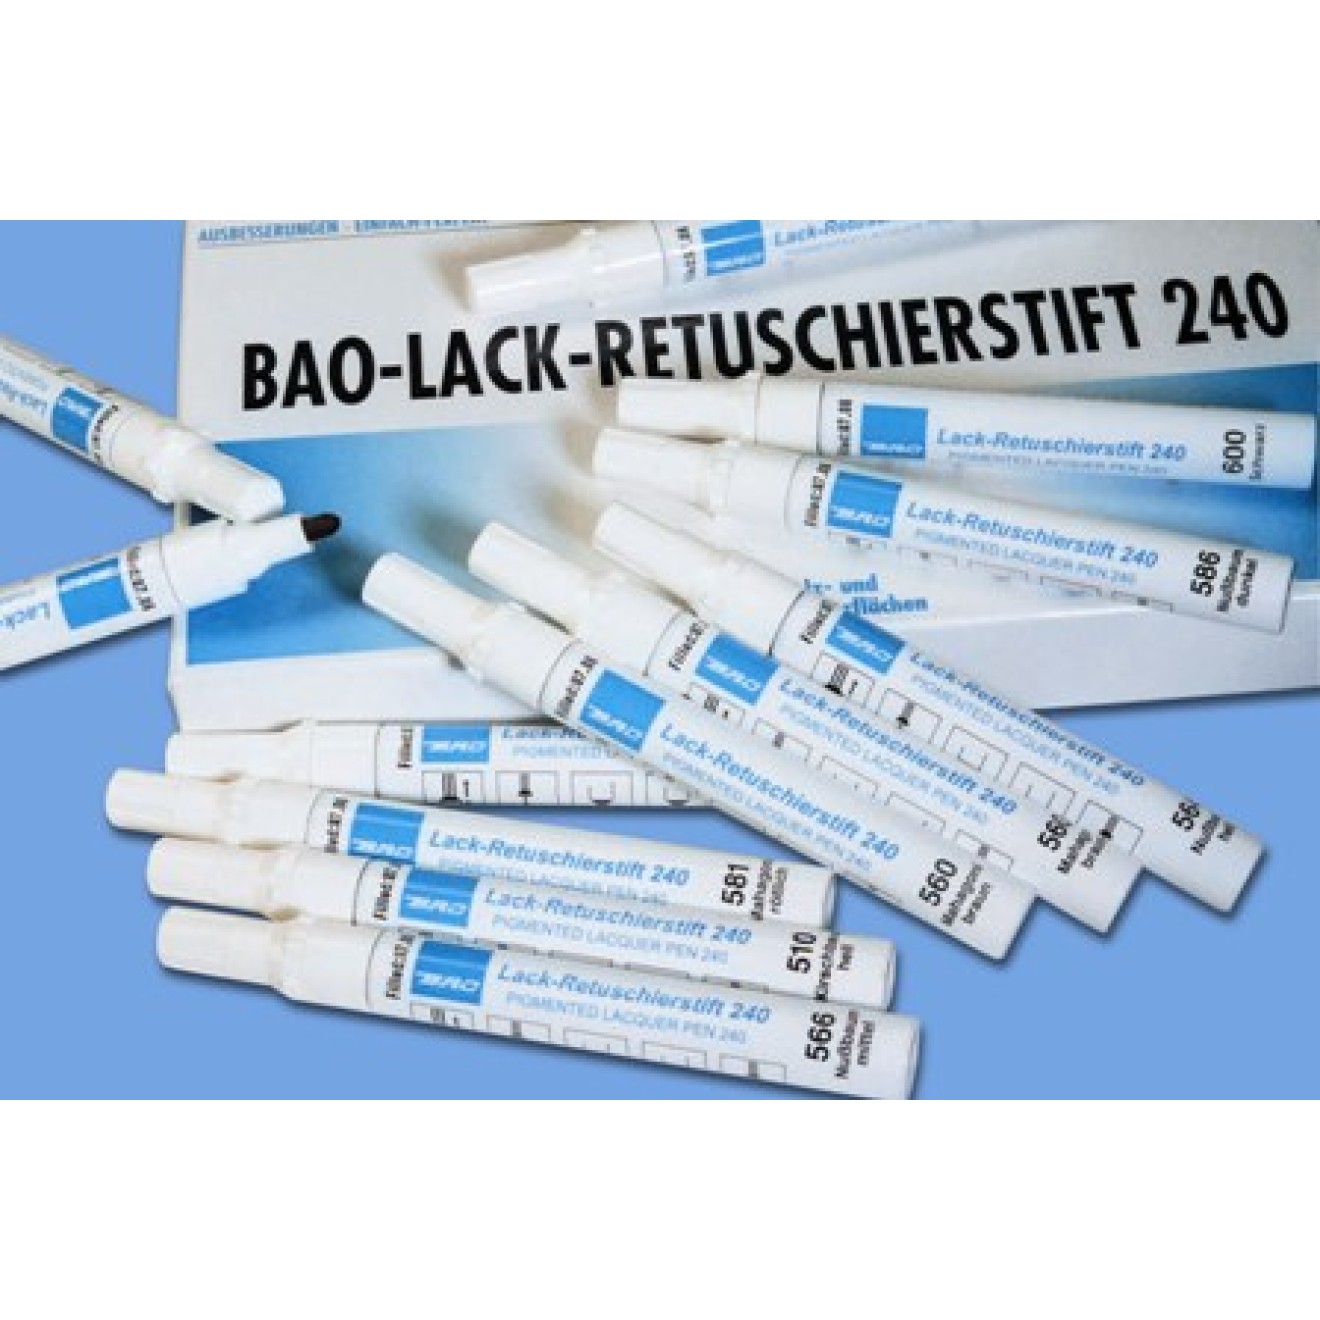 Bao-Lack Retuschierstift 240